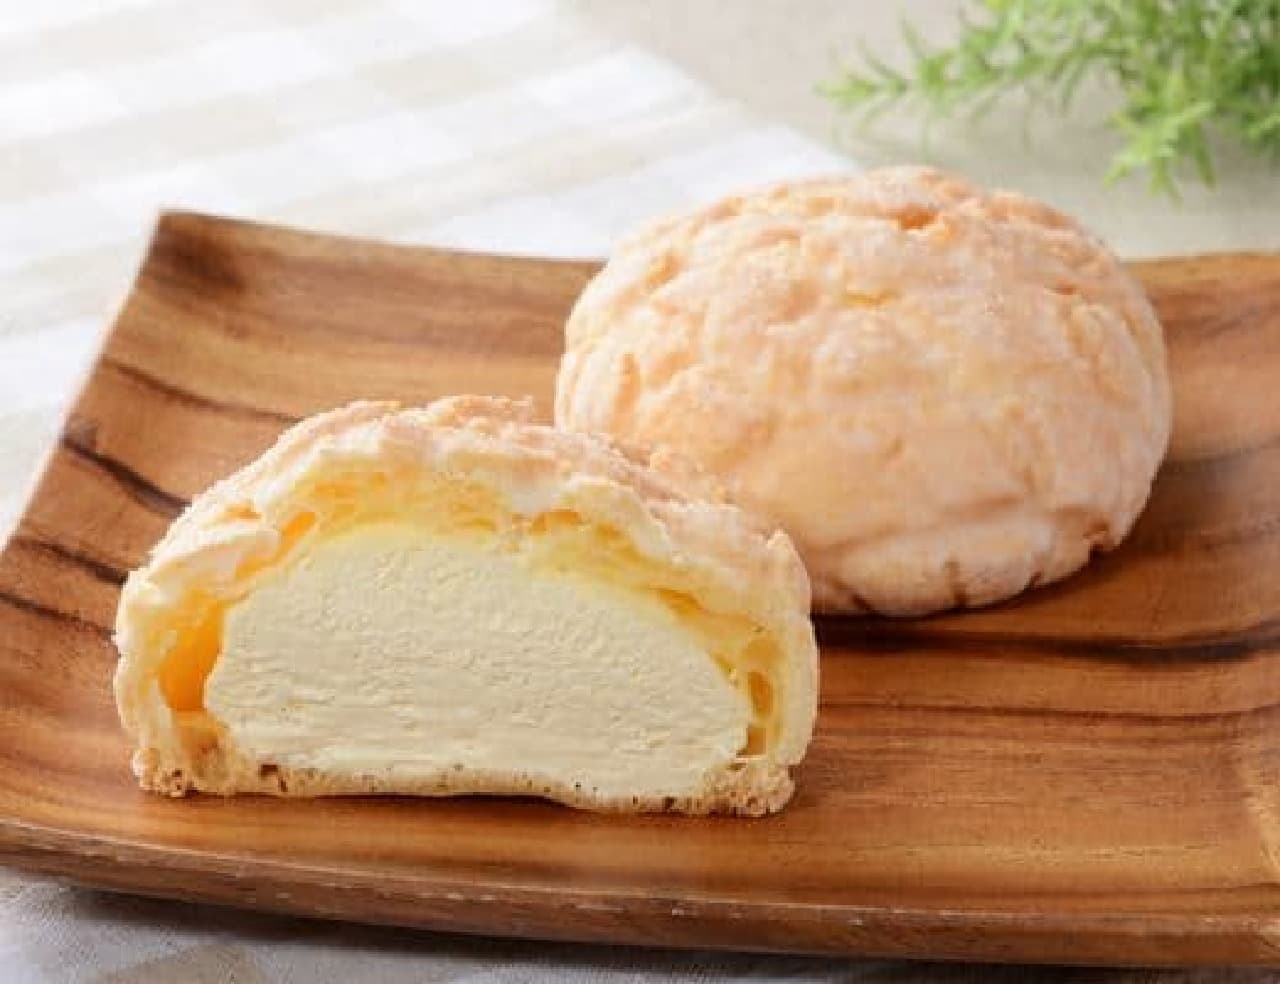 LAWSON "Cream Puffs That Look Like Melon Bread"